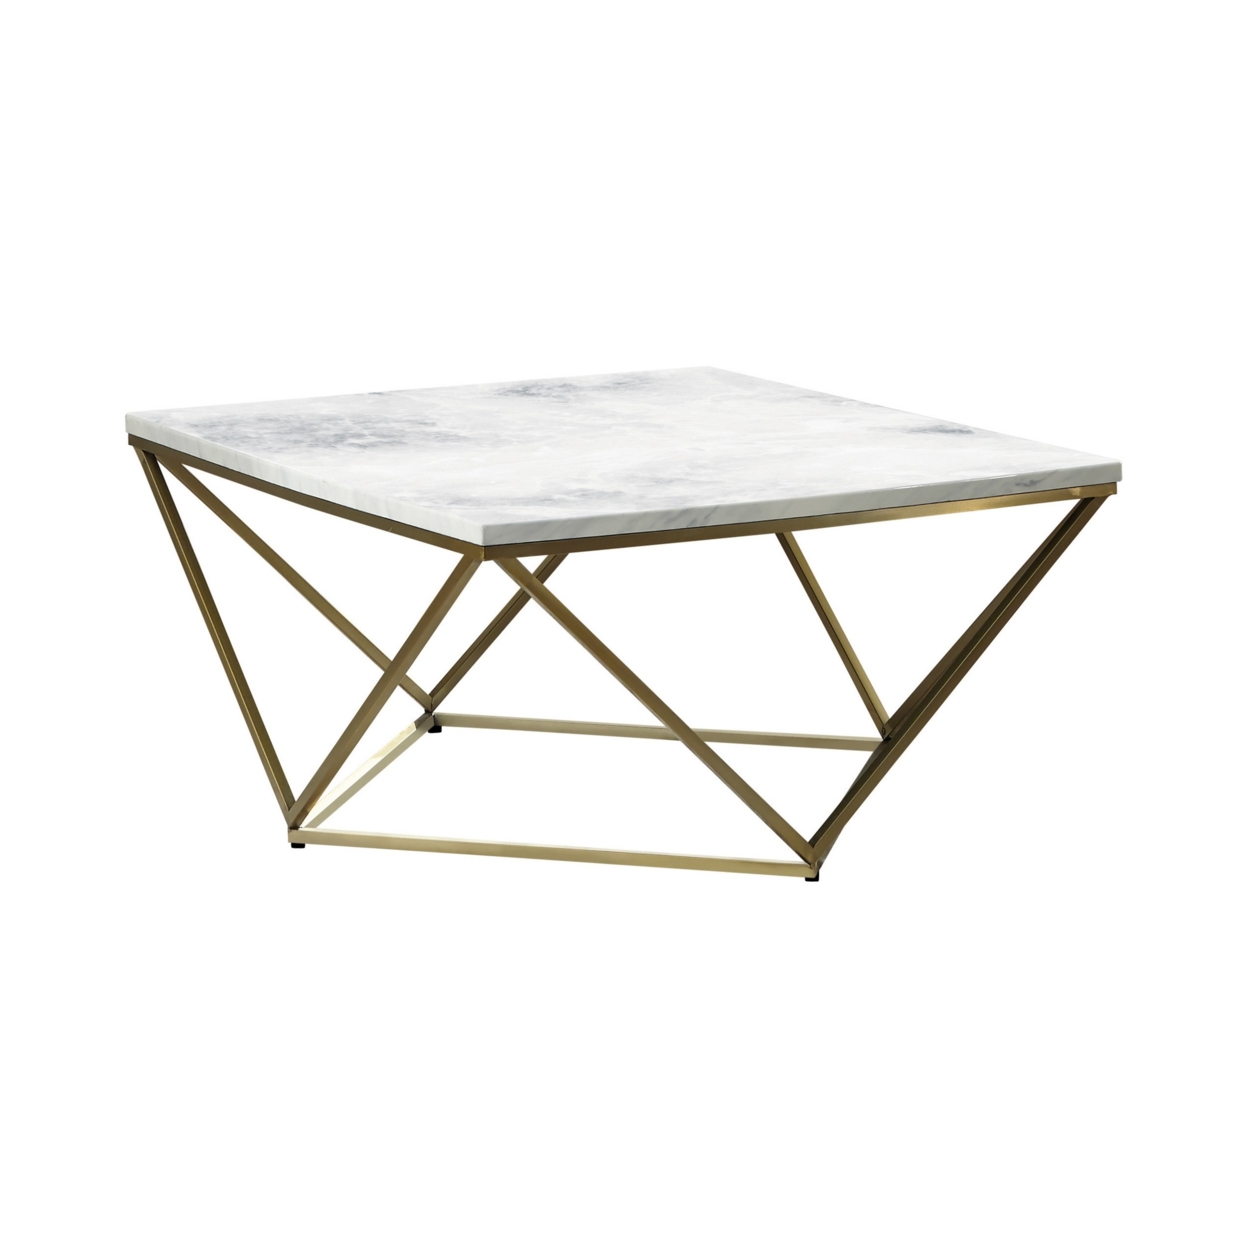 36 Inch Modern Square Coffee Table, White Faux Marble Top, Slender Gold Base- Saltoro Sherpi